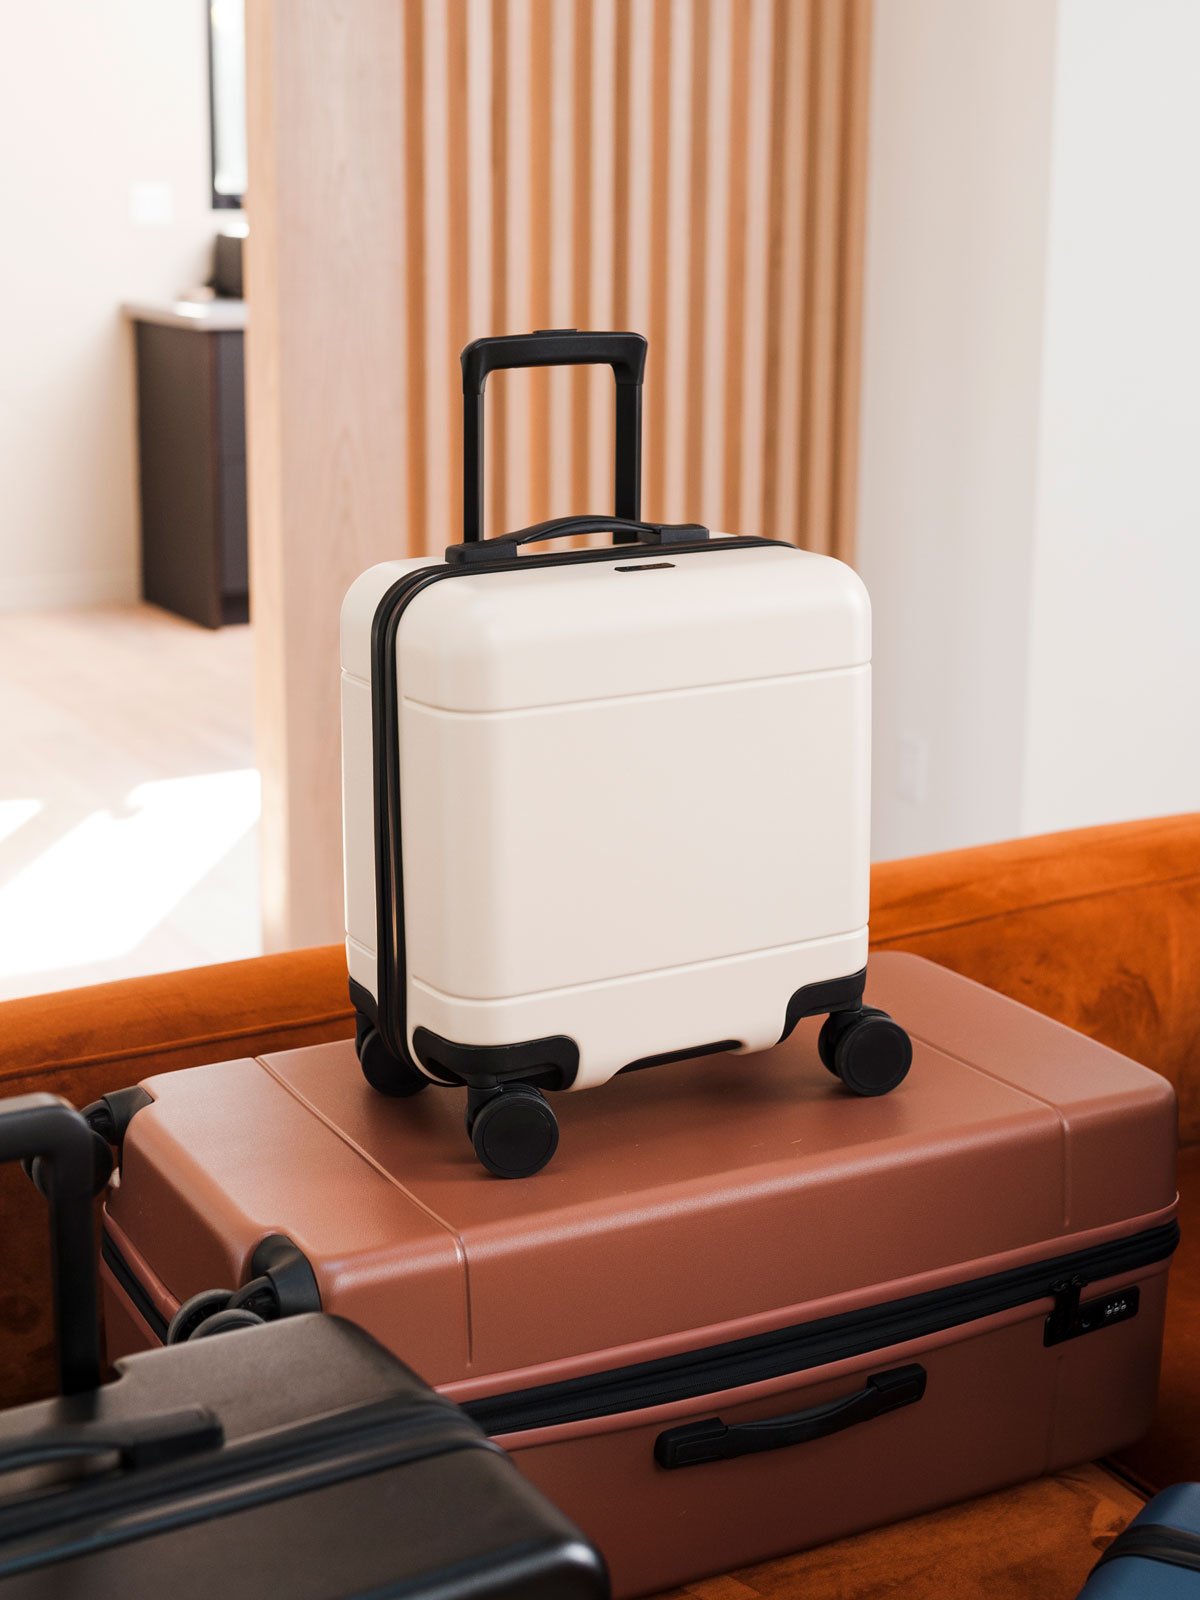 Trnk 3-Piece Luggage Set